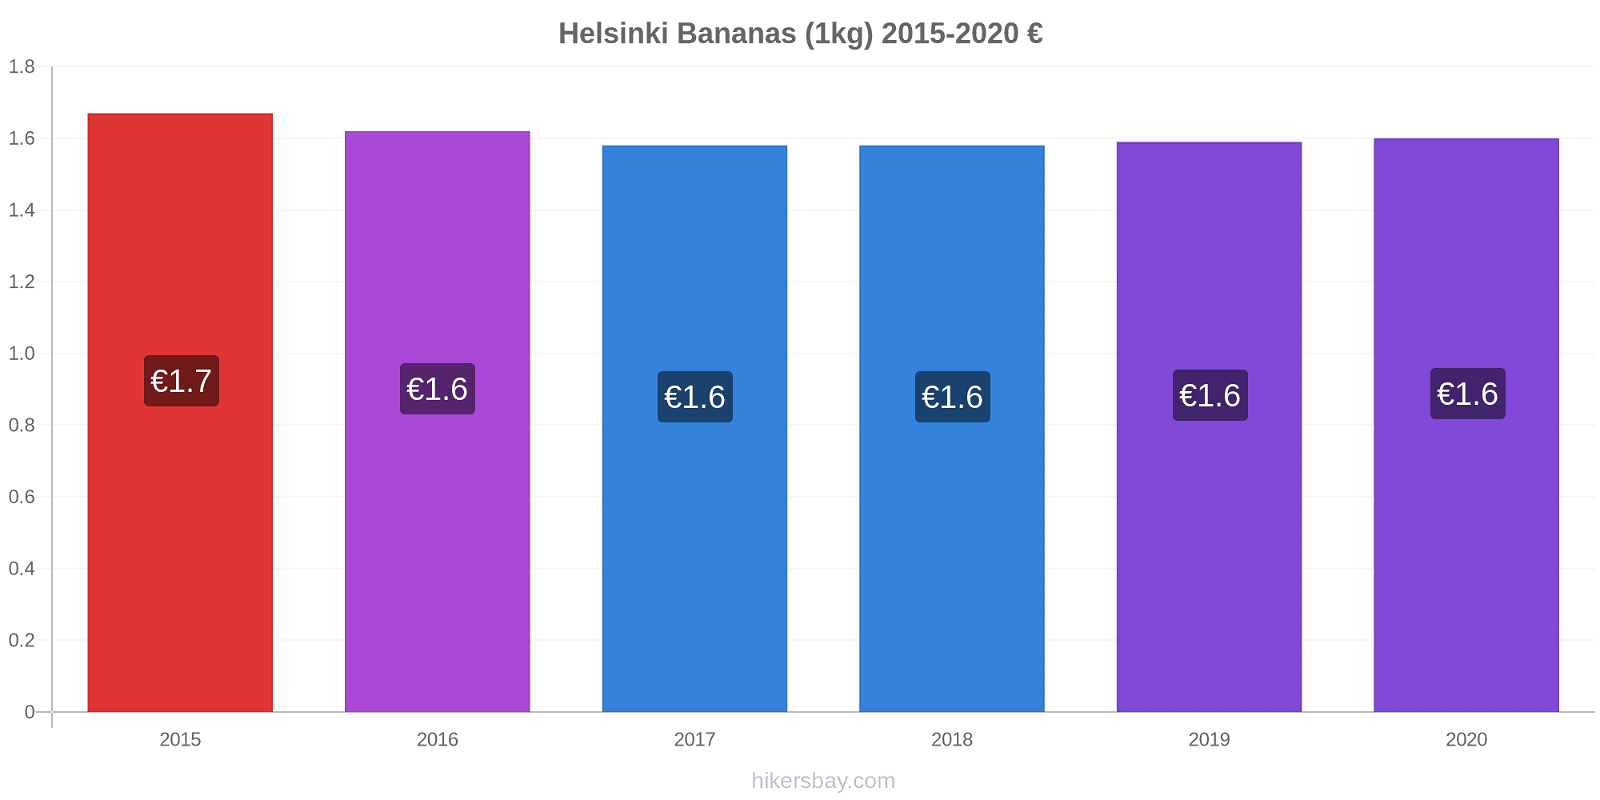 Helsinki price changes Bananas (1kg) hikersbay.com